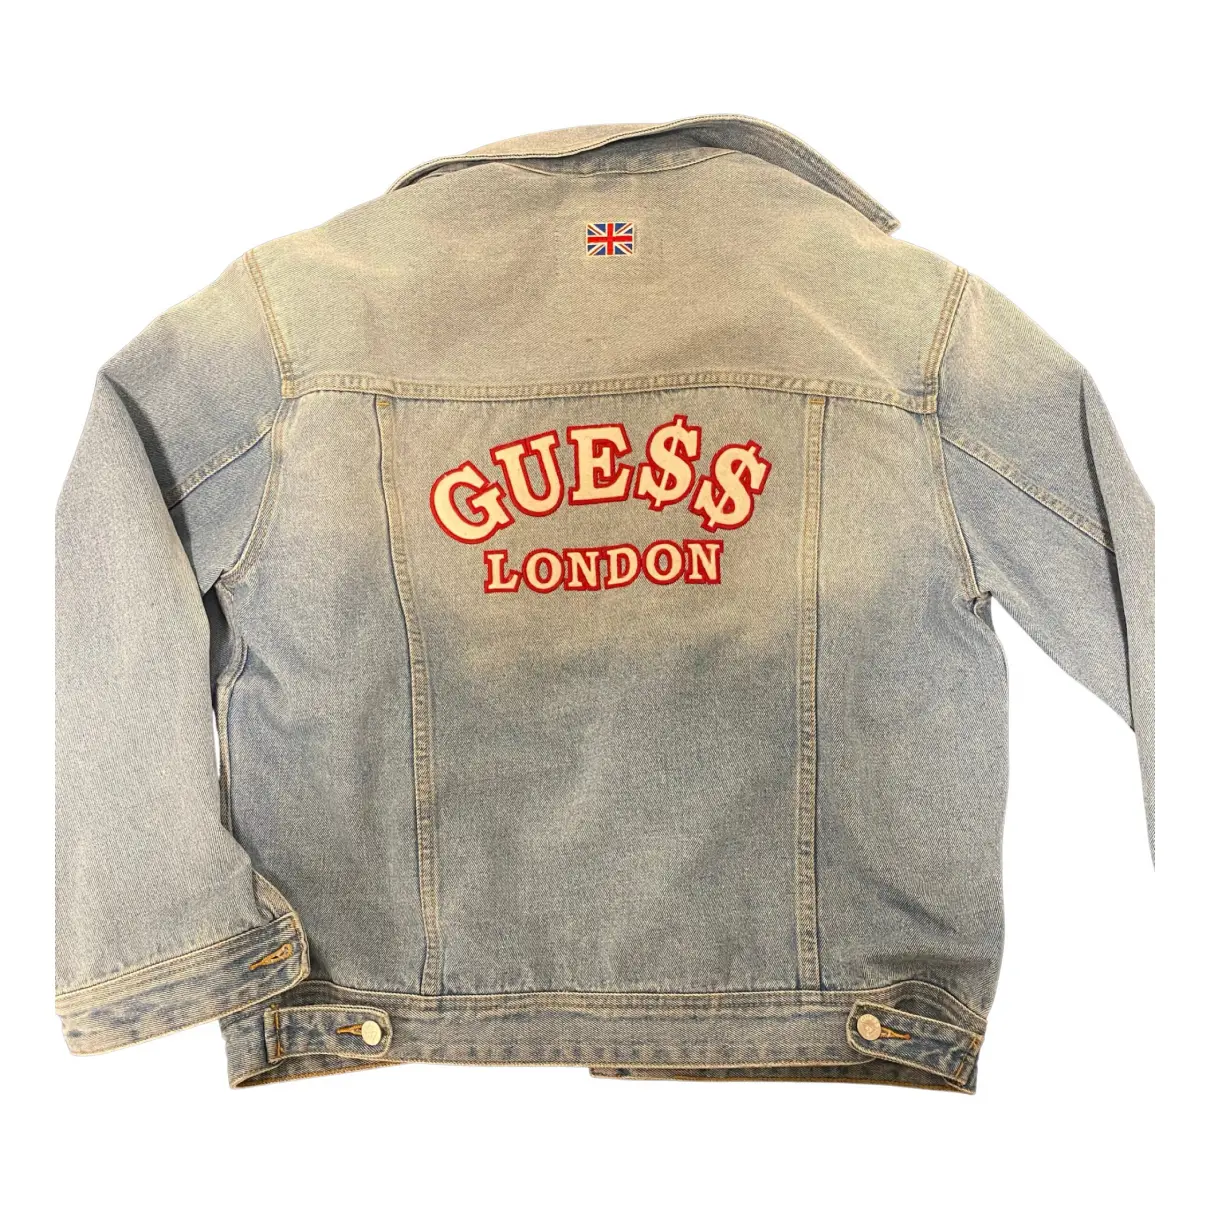 Buy Guess x A$AP Rocky Jacket online